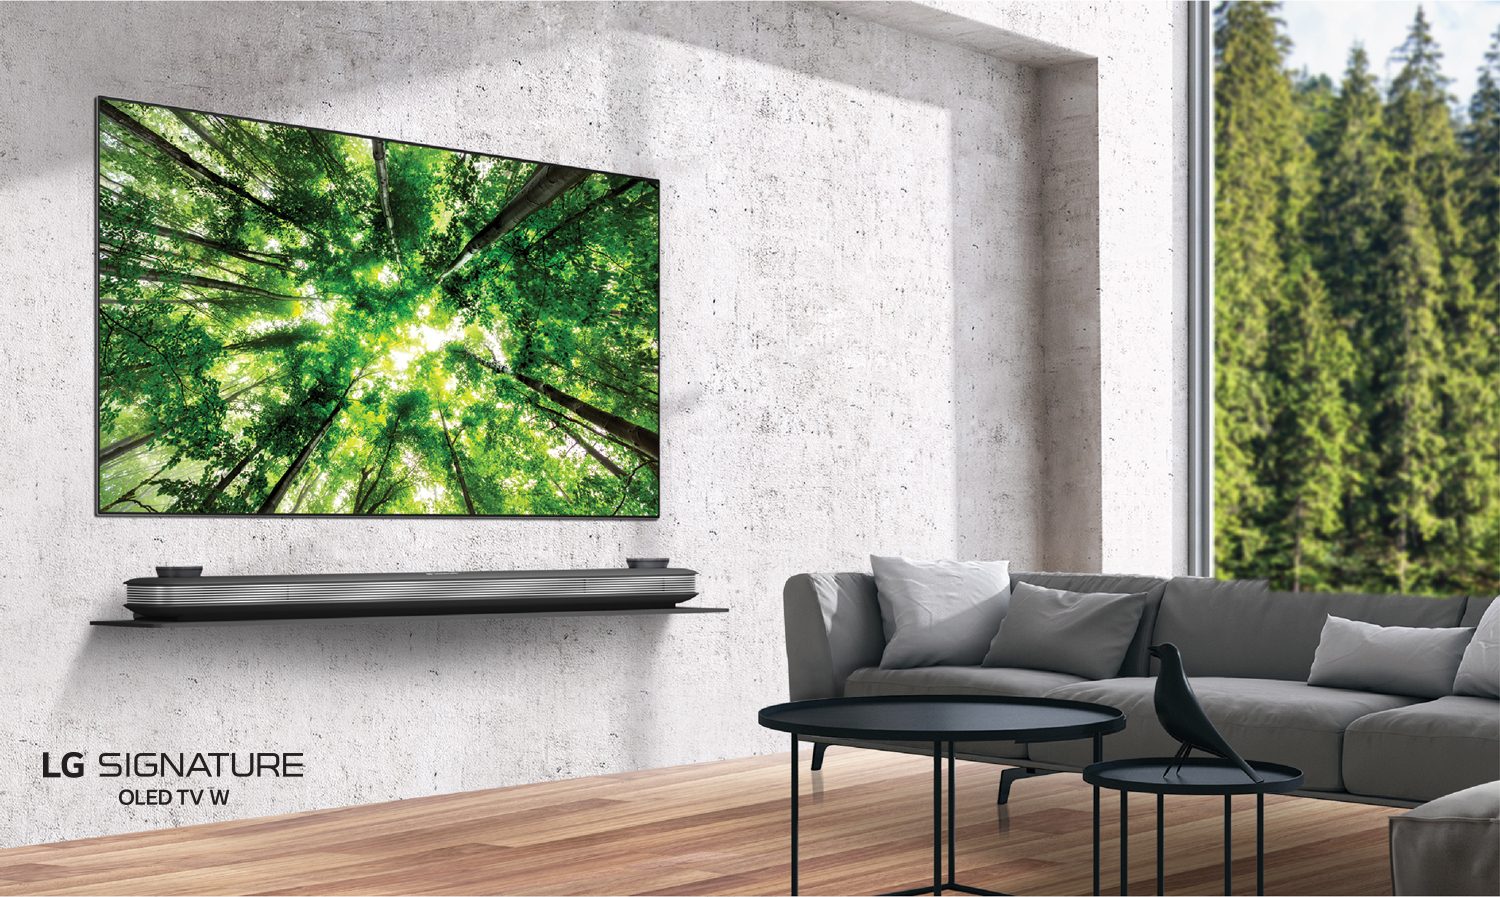 LG เปิดตัว OLED TV ซีรี่ส์ W8 วอลเปเปอร์ทีวีไร้ขอบบางเฉียบ